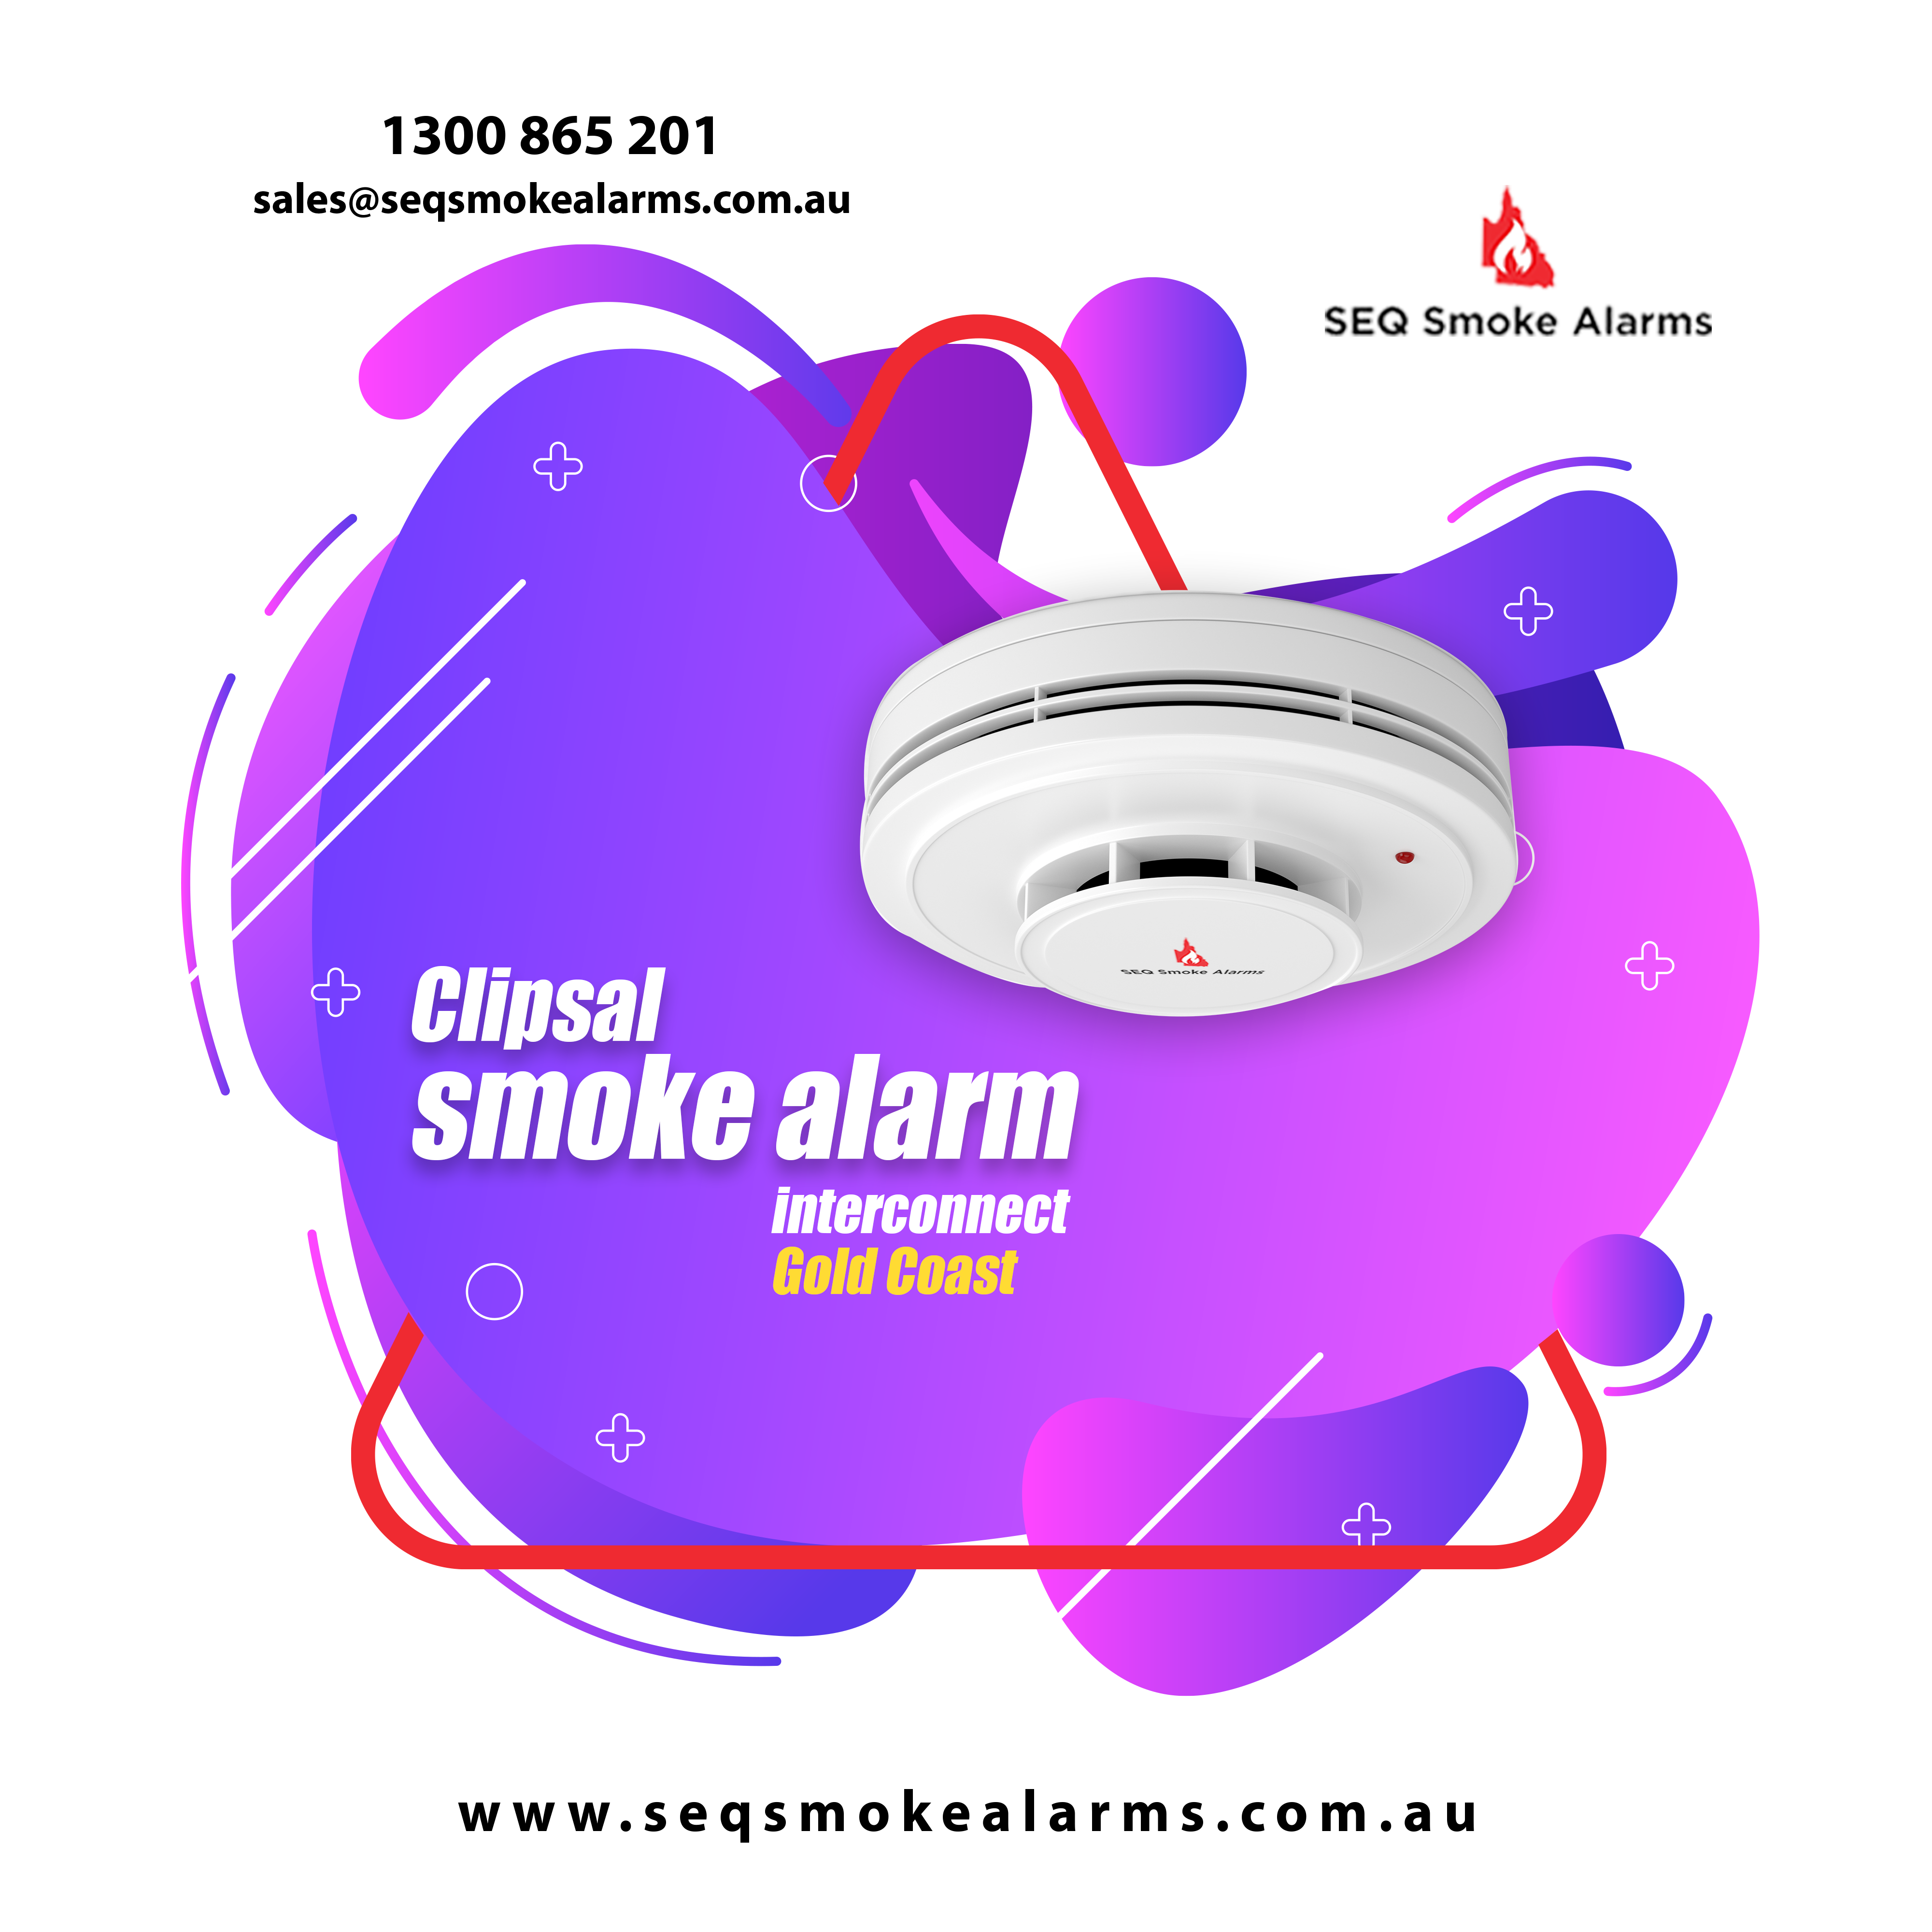 Clipsal smoke alarm interconnect Gold Coast